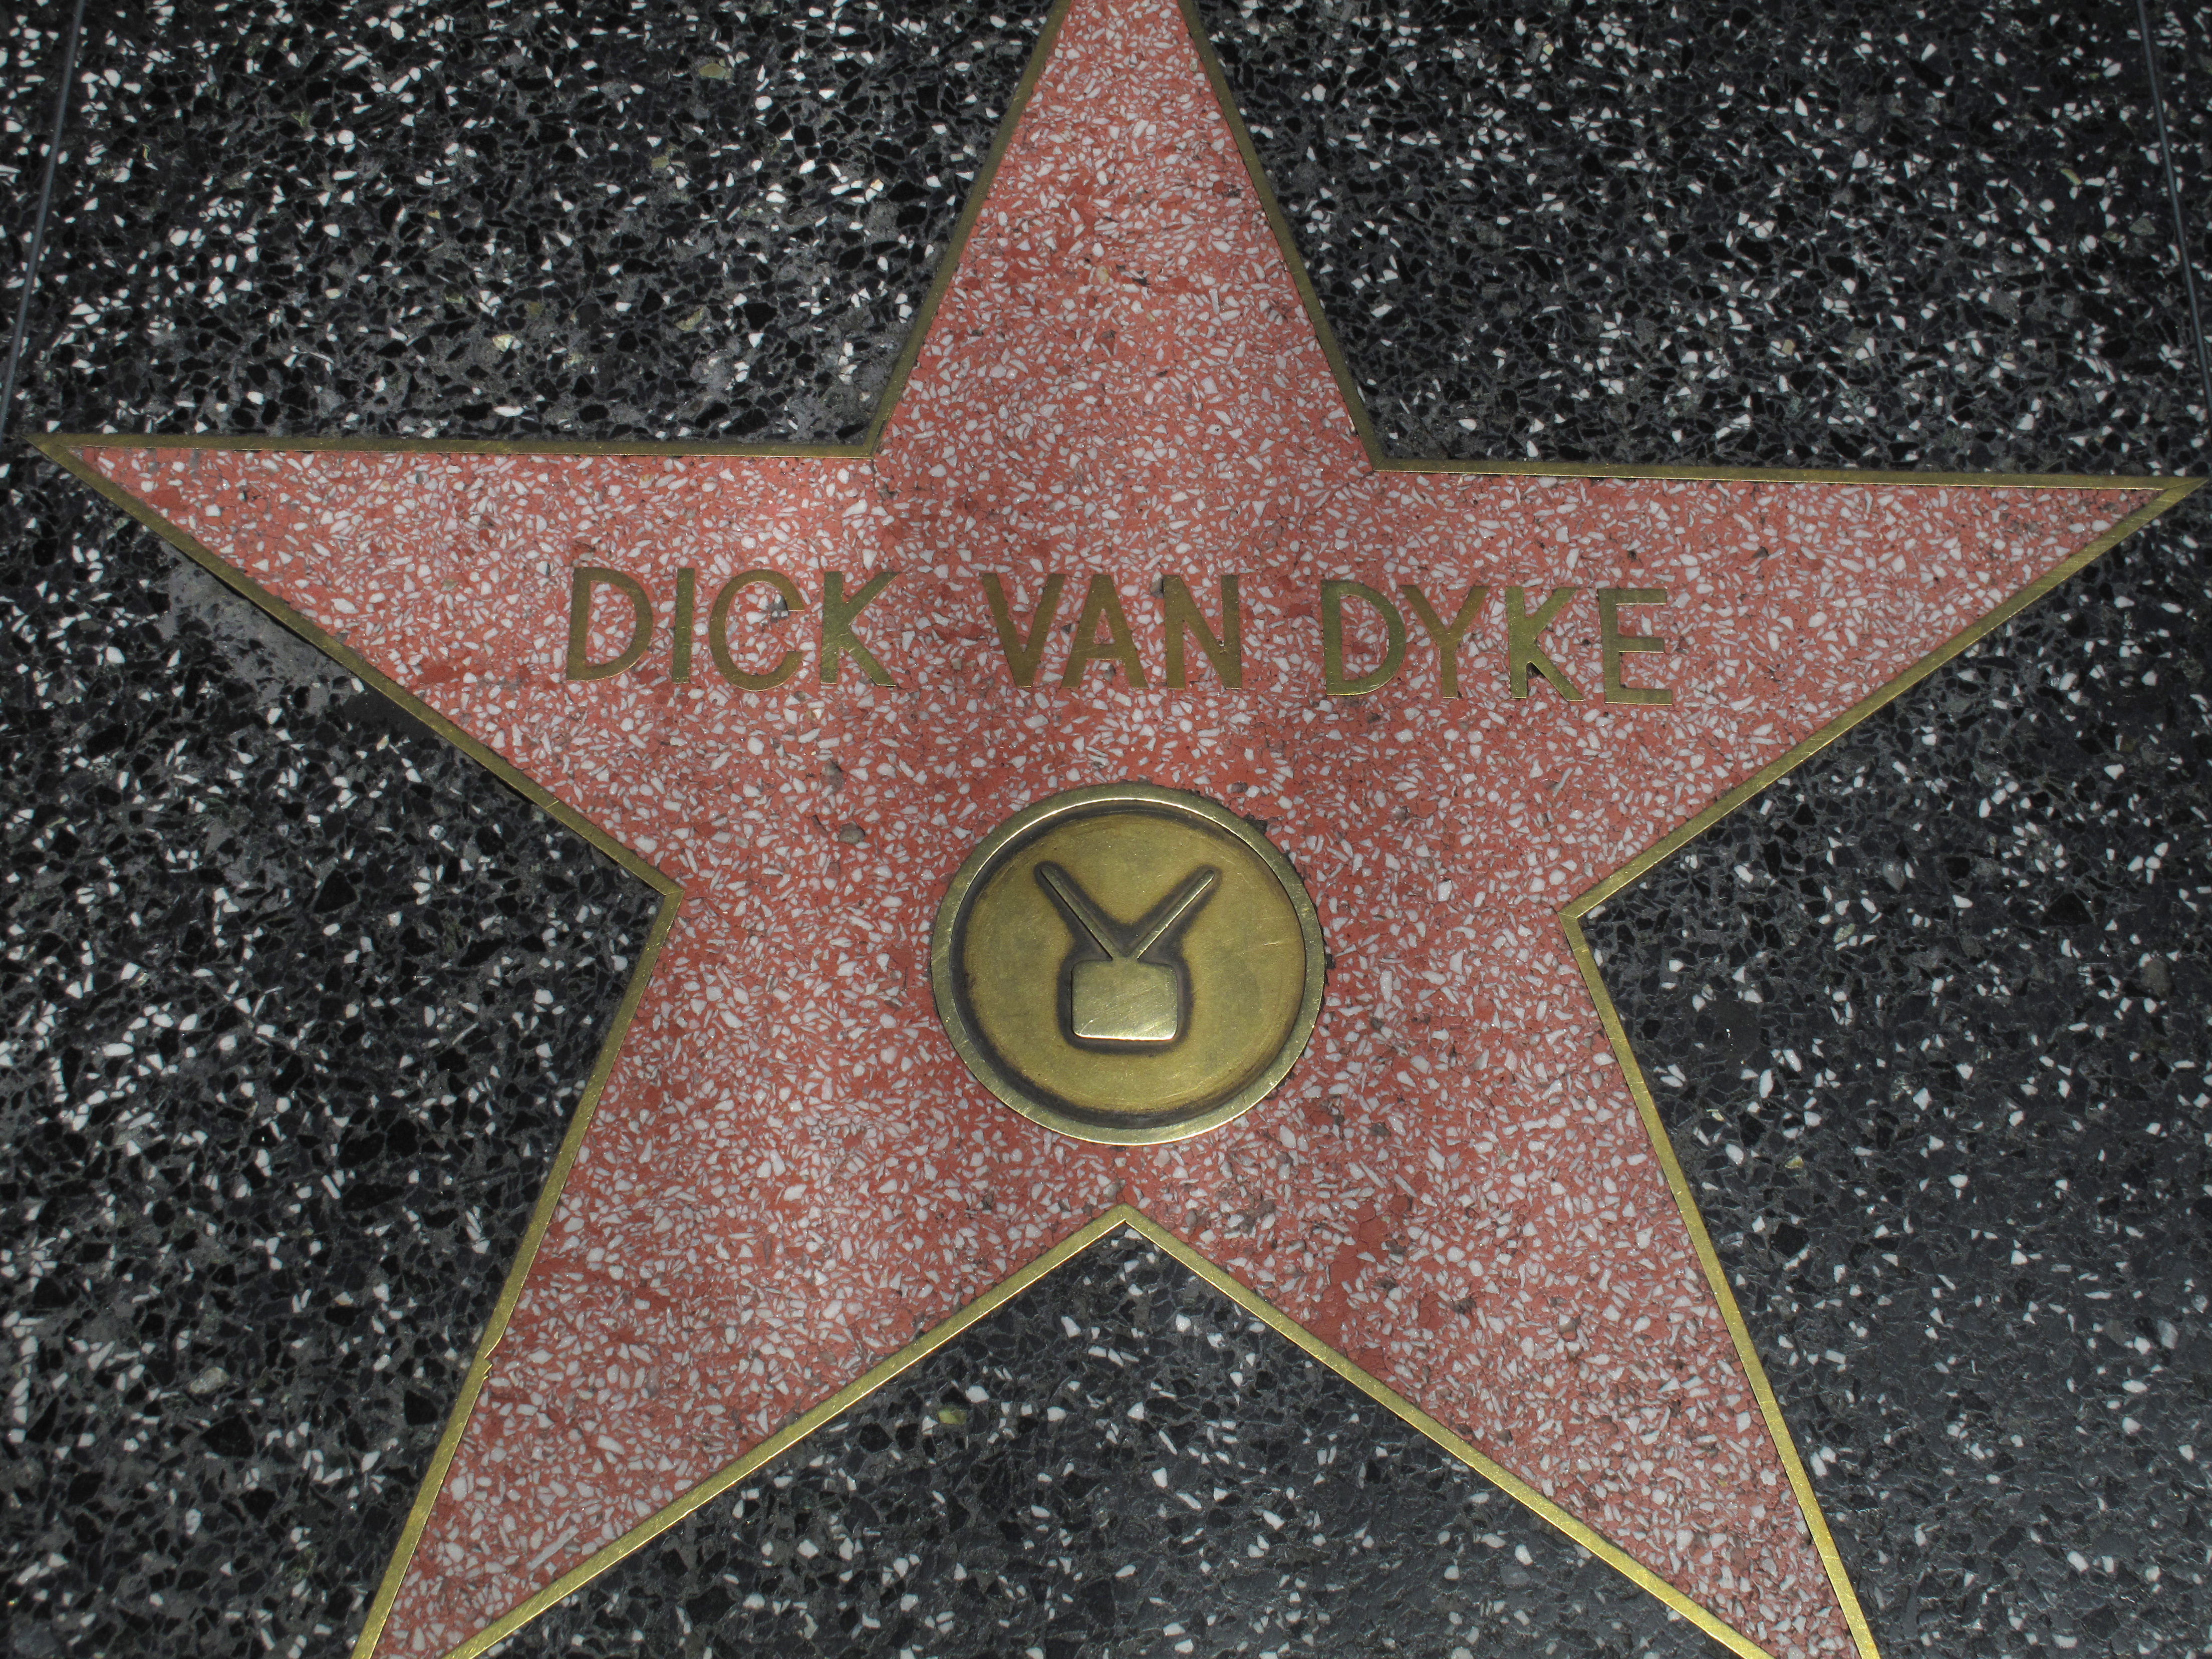 Dick van dyke walk of fame